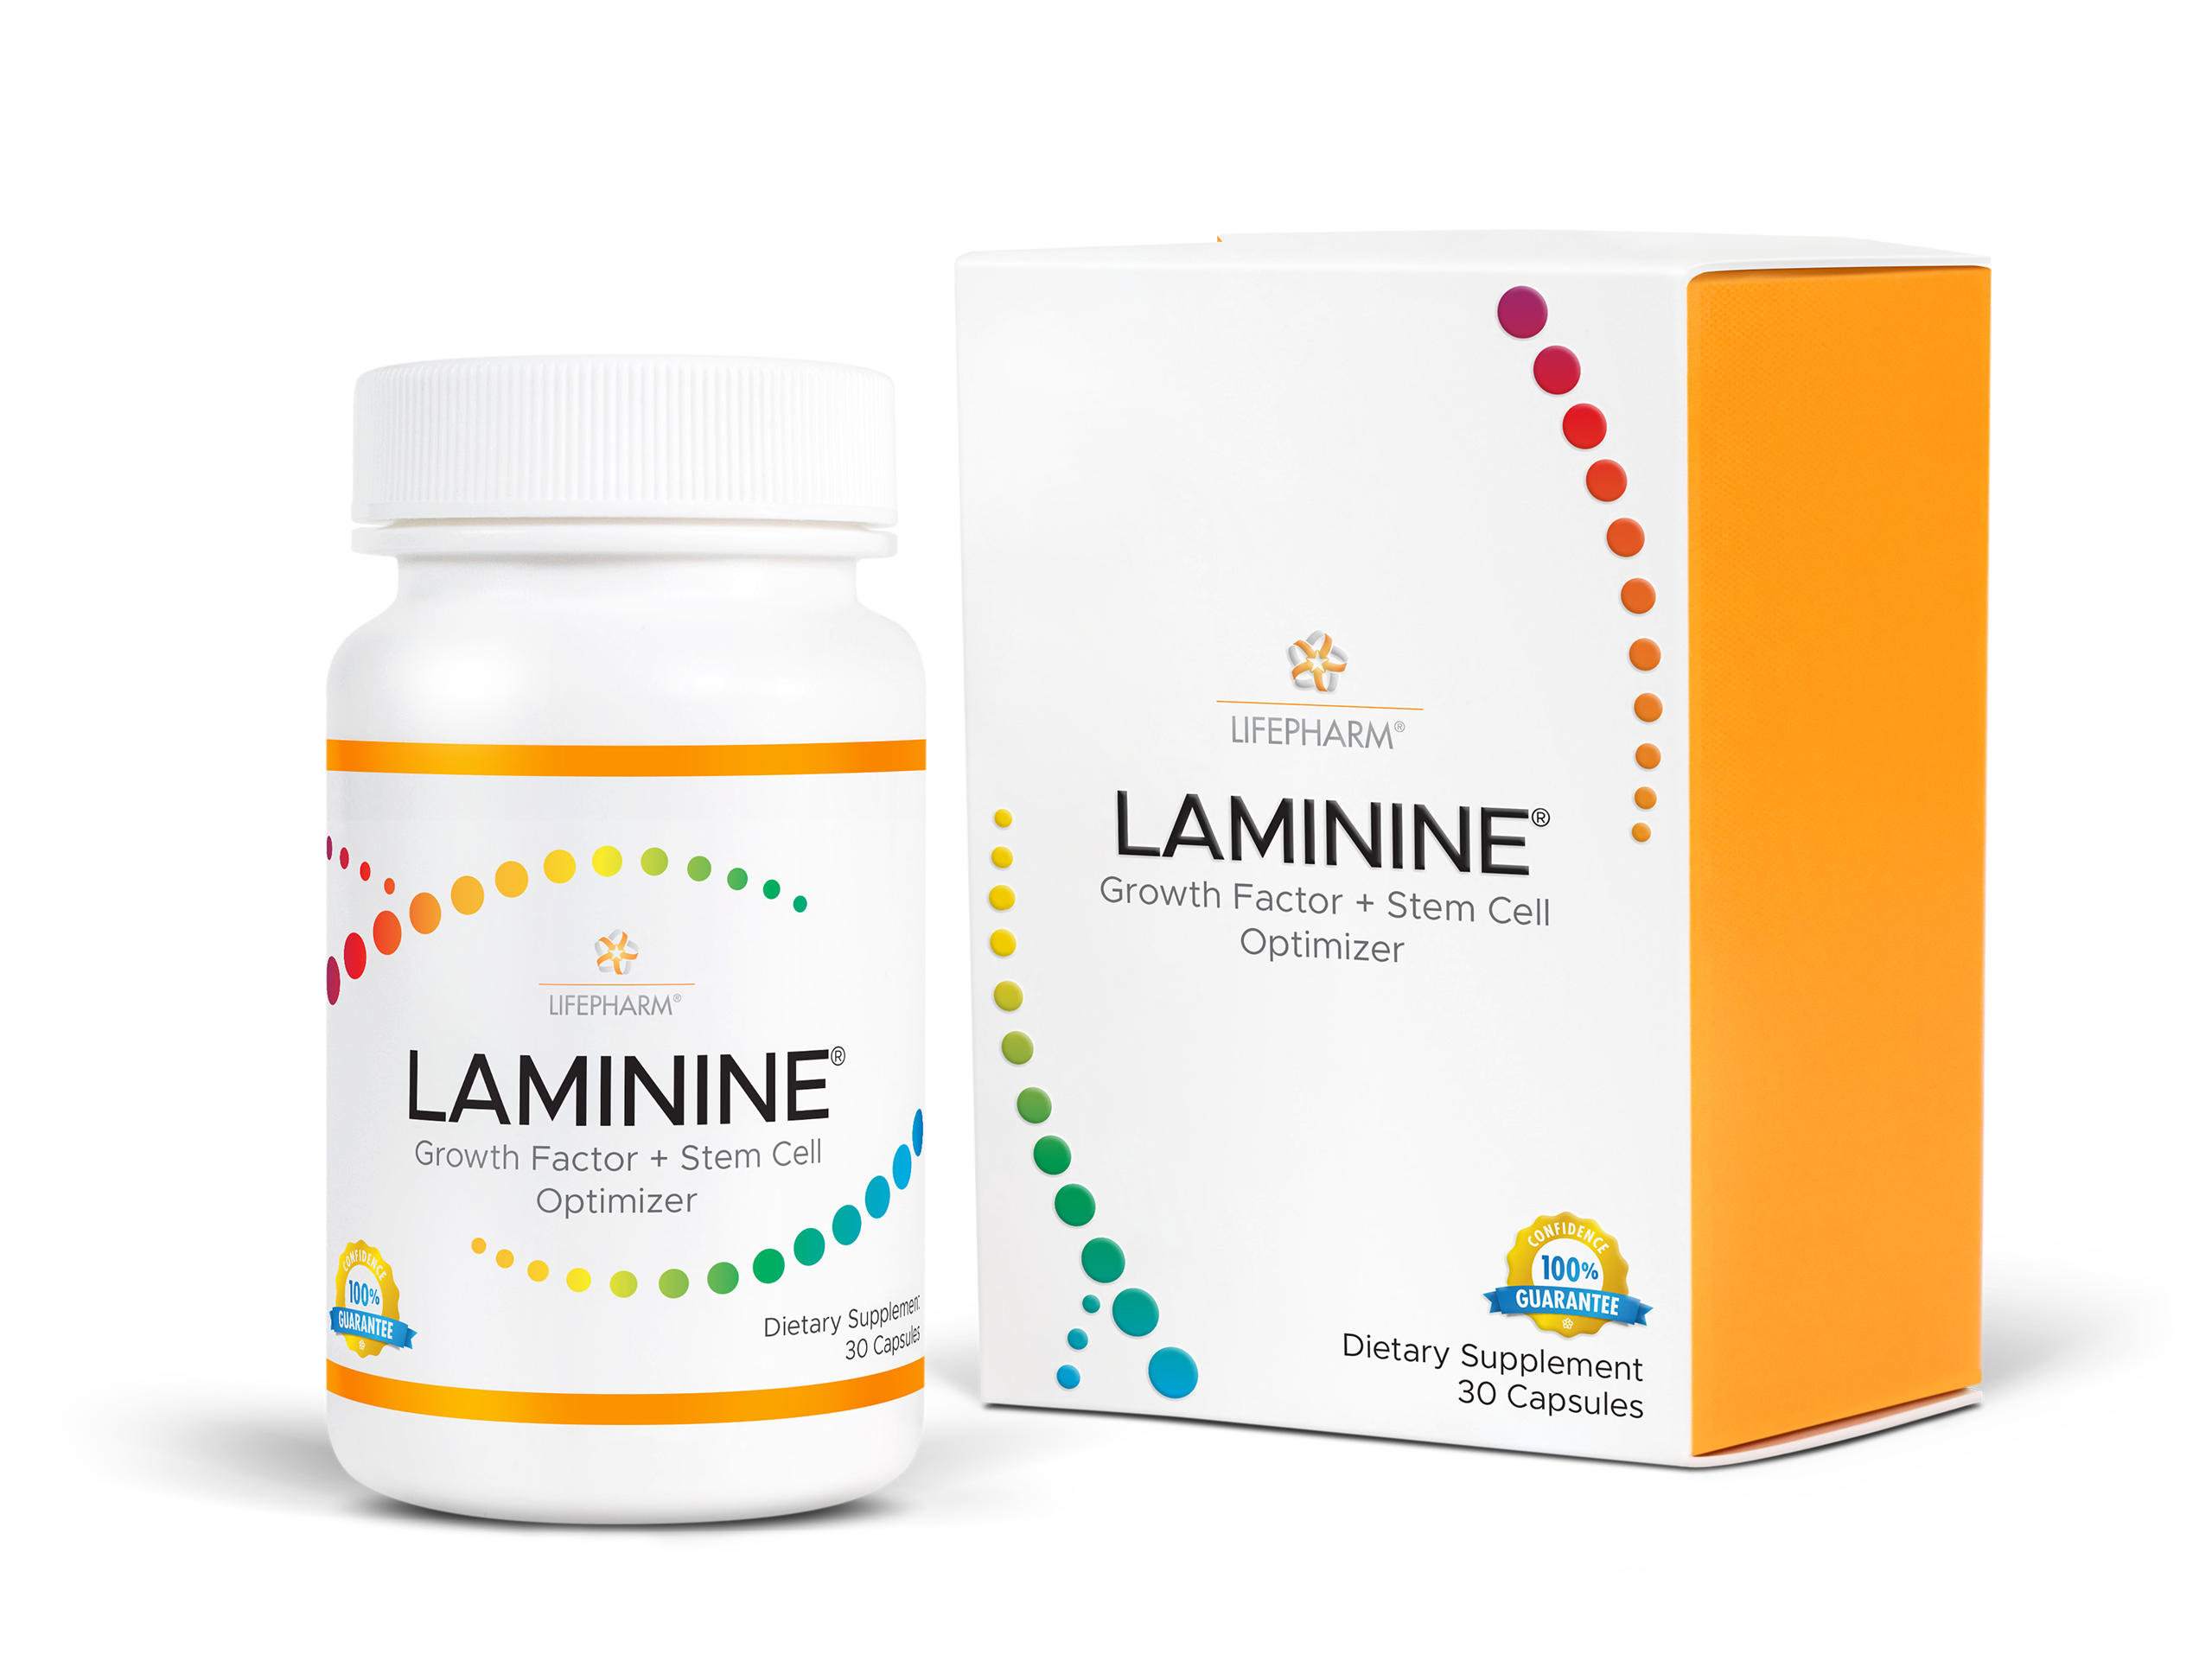 Laminine Product